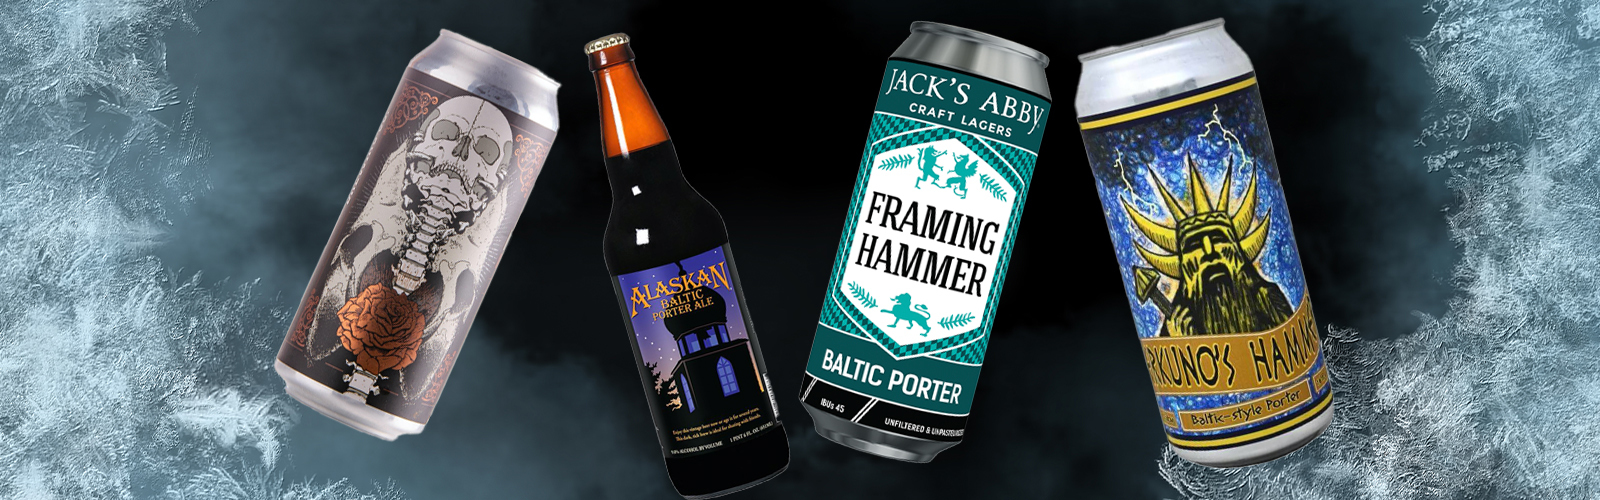 Incendriary/Alaskan/Jack's Abby/Brewery Techne/istock/Uproxx